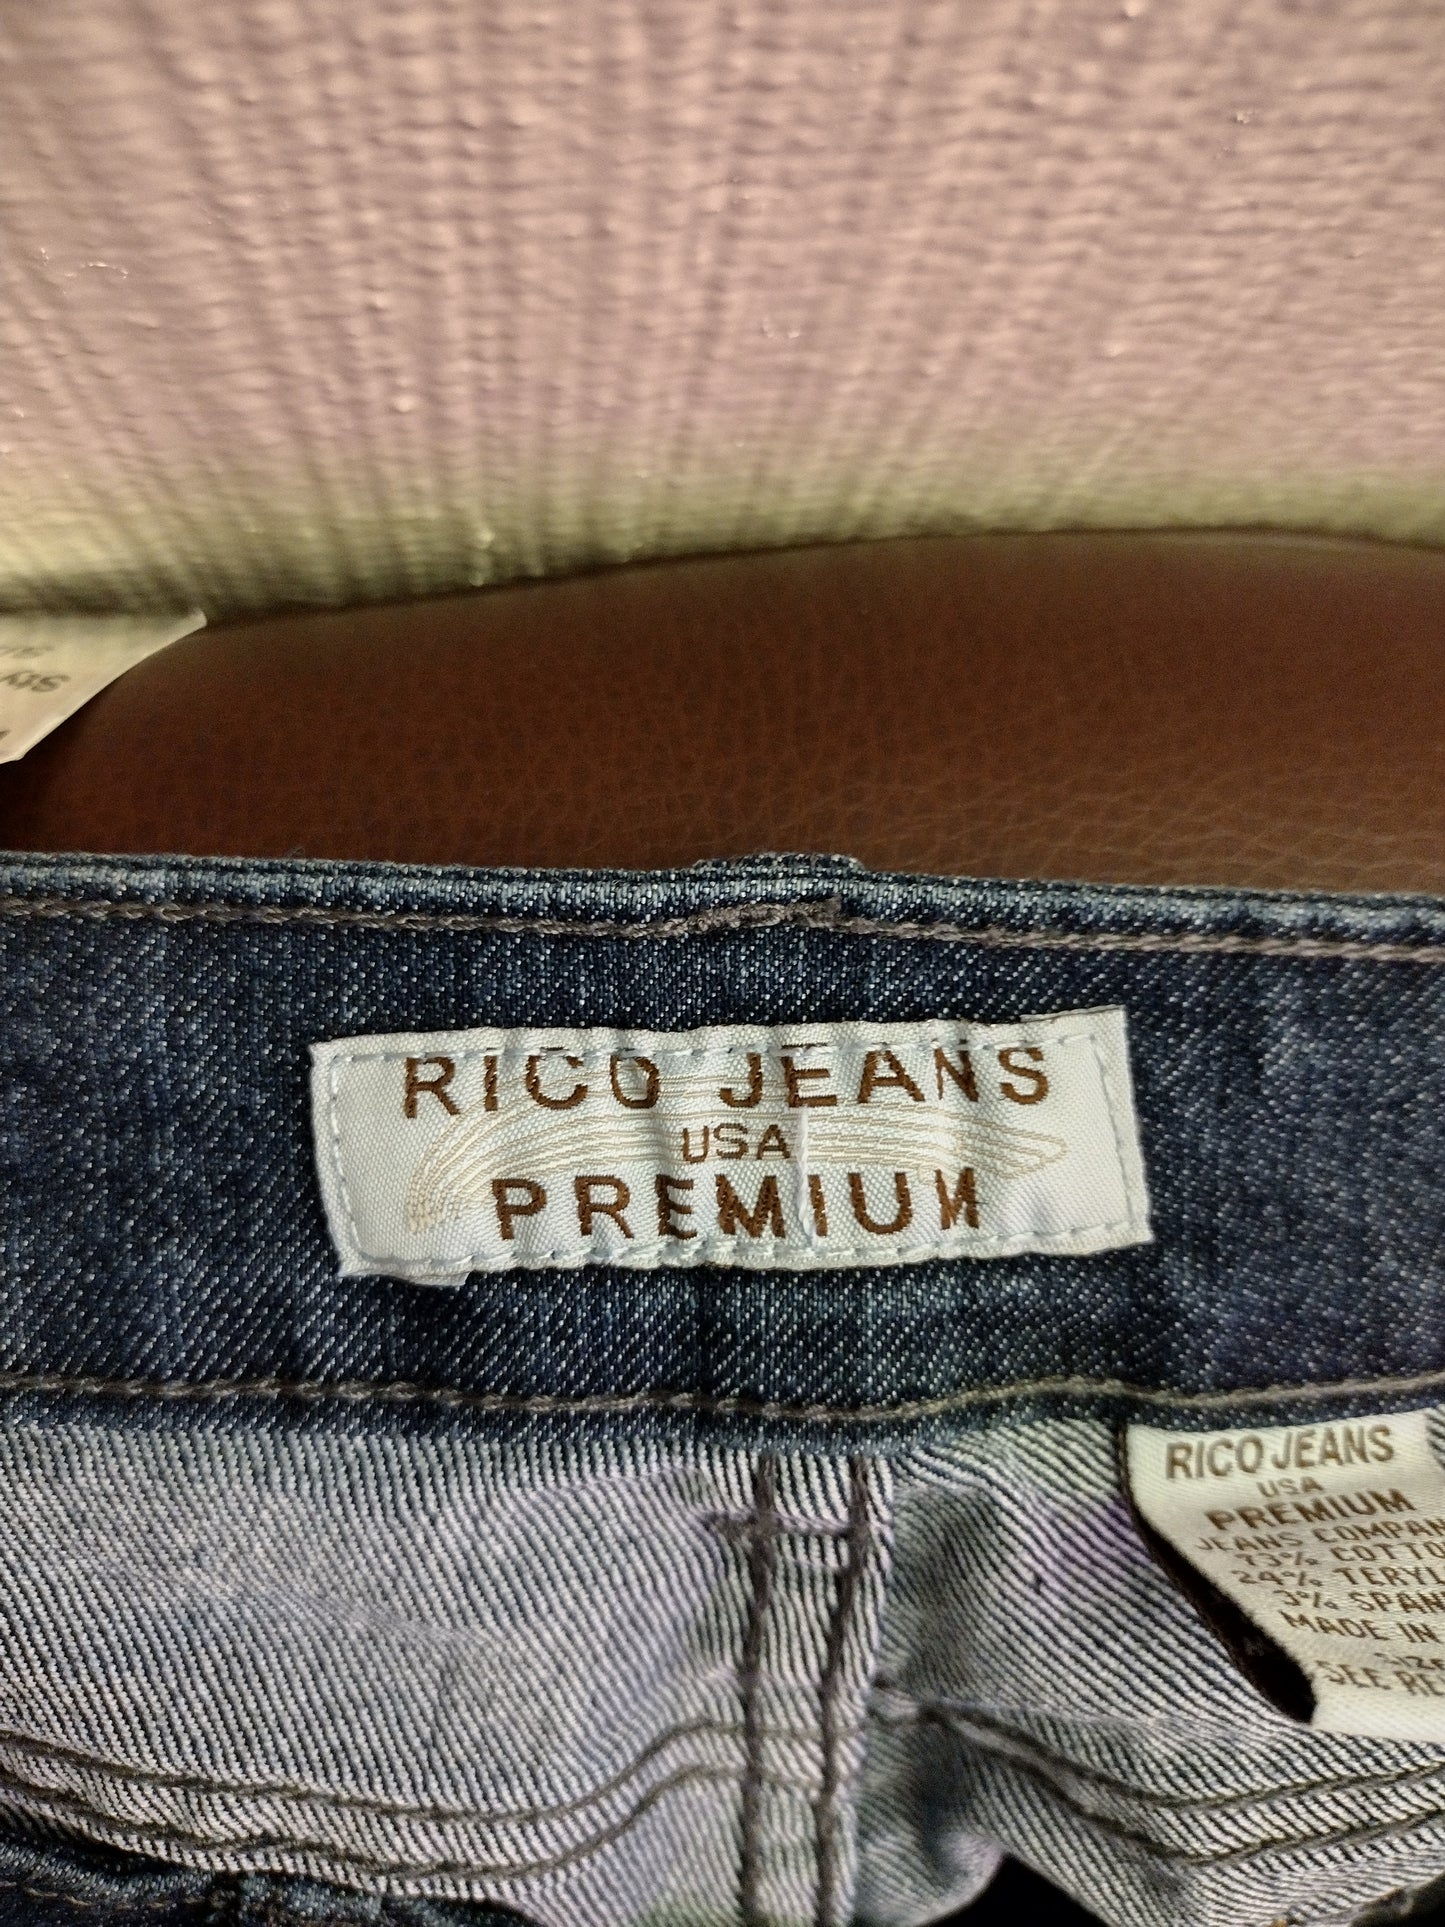 Rico Jean's USA Premium Jeans Company Women's Jeans Size - 15